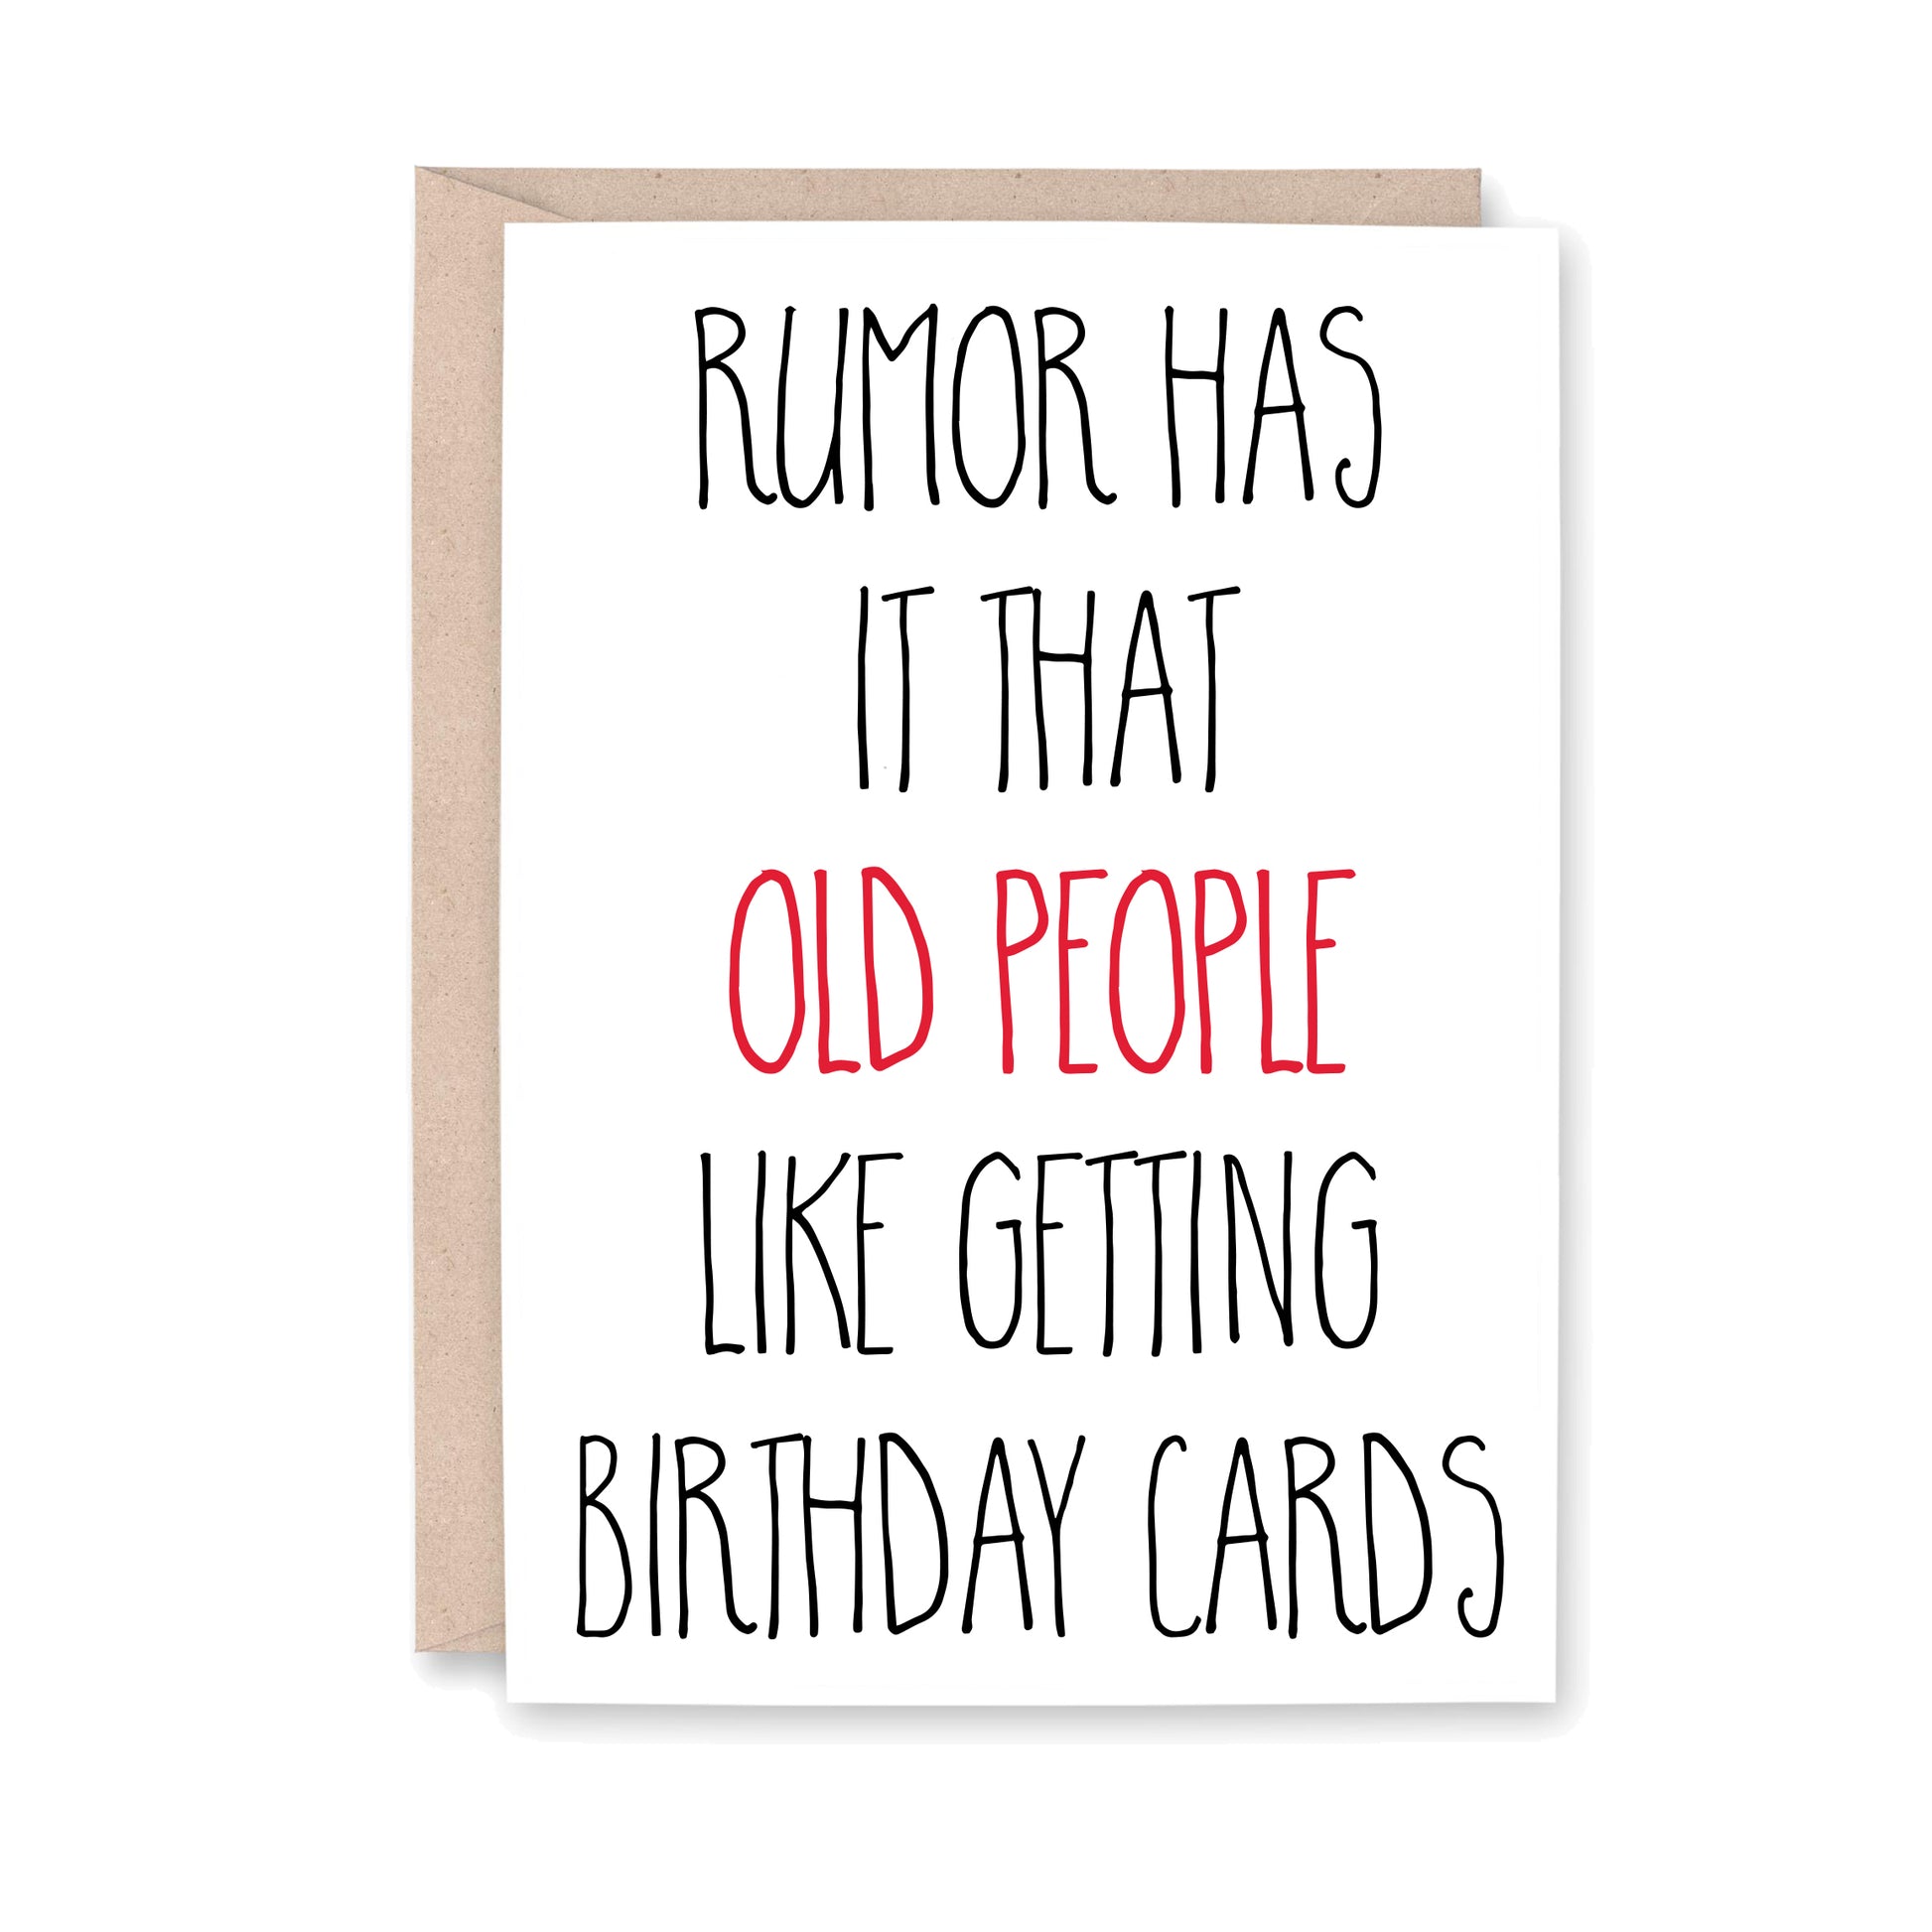 Rumor has it that Old People like getting Birthday Cards greeting card